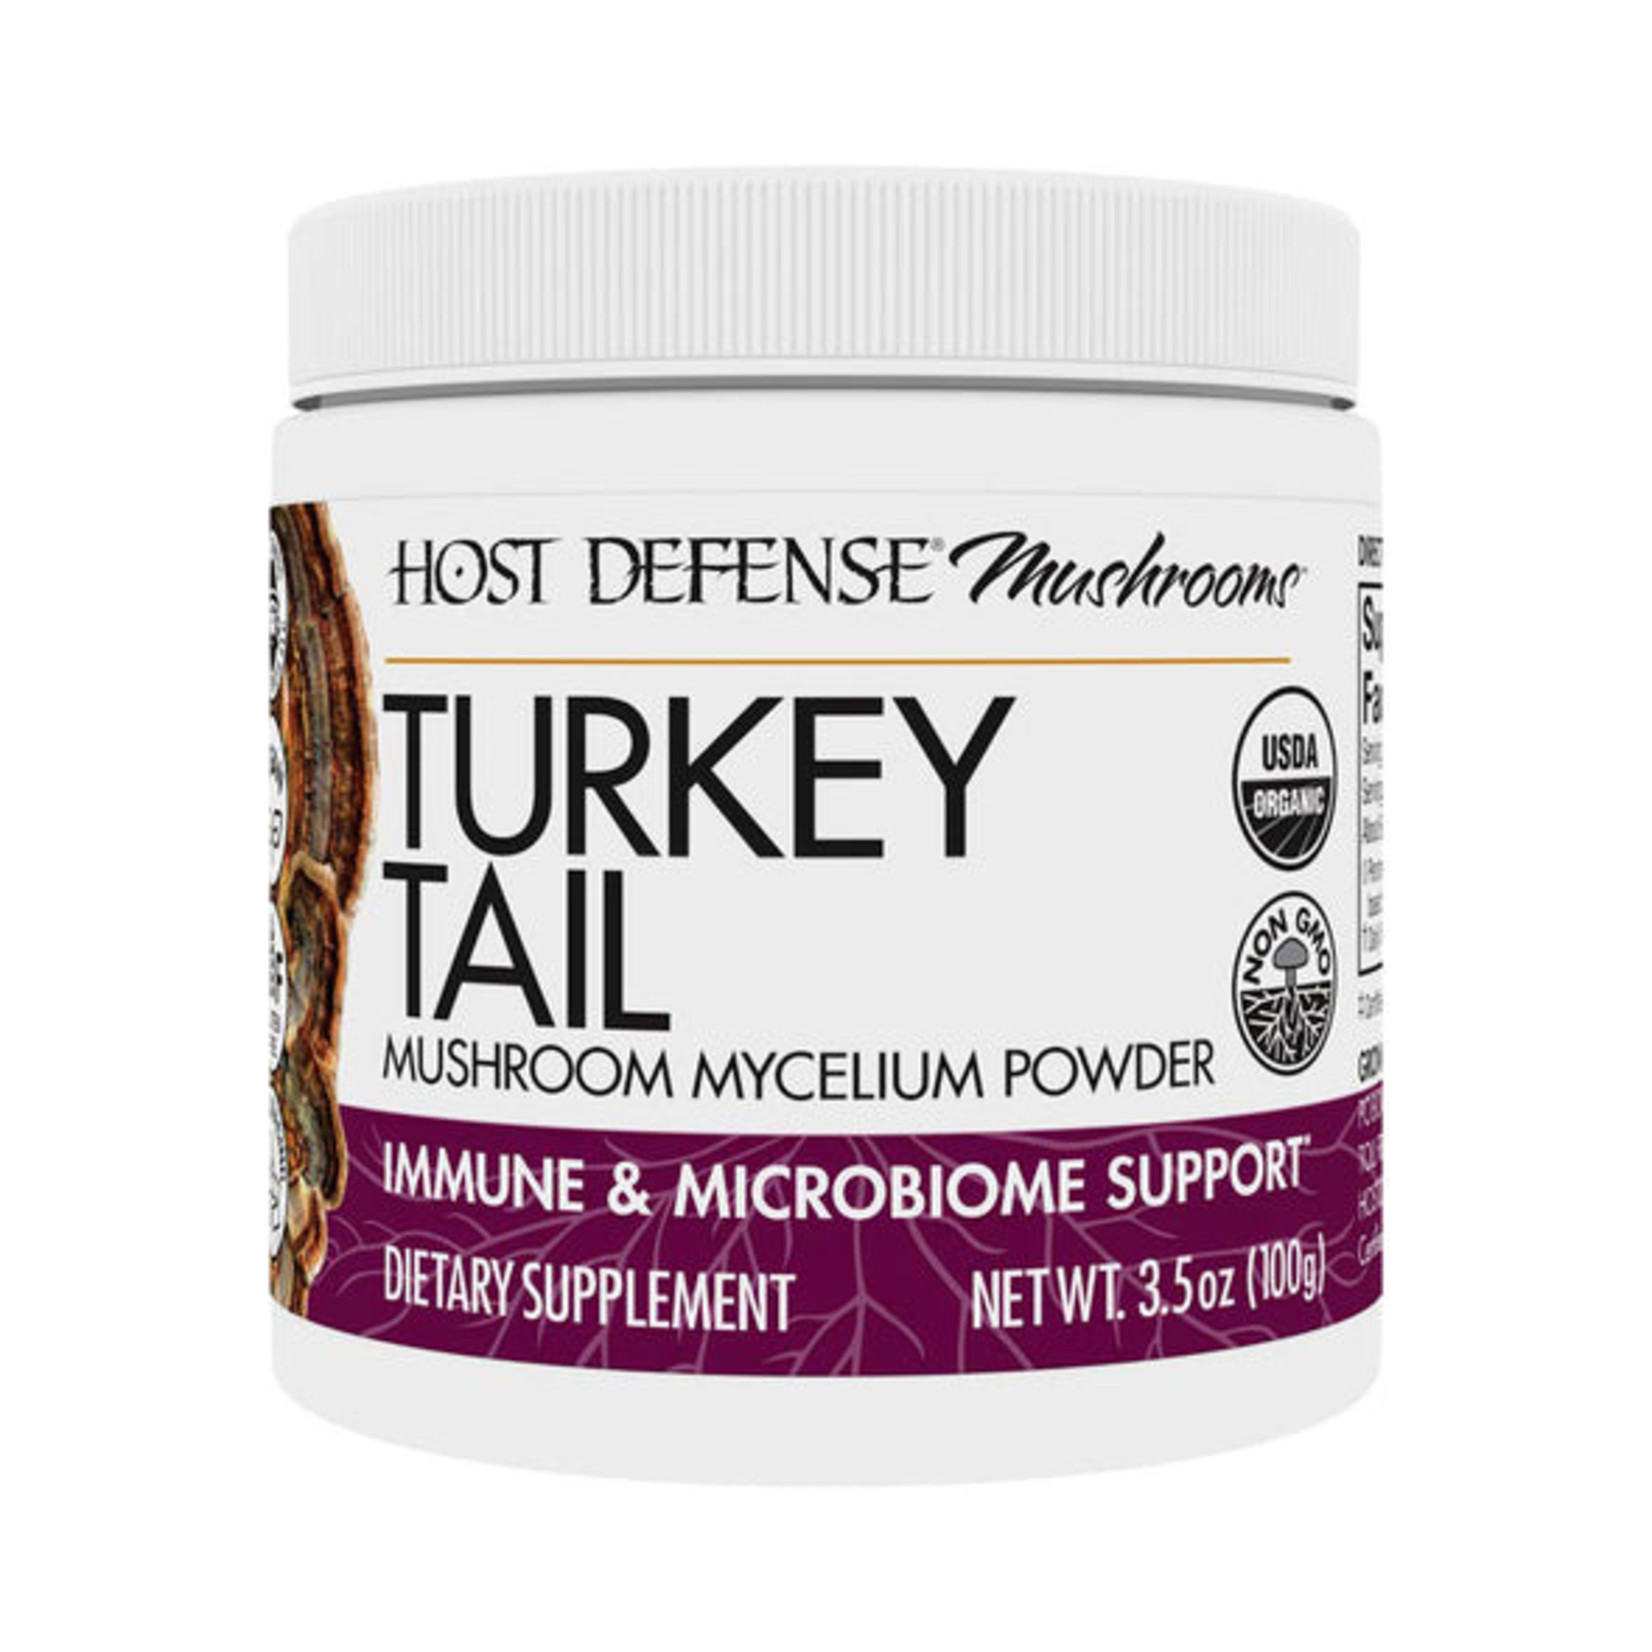 Host Defense Host Defense - Turkey Tail - 100g powder